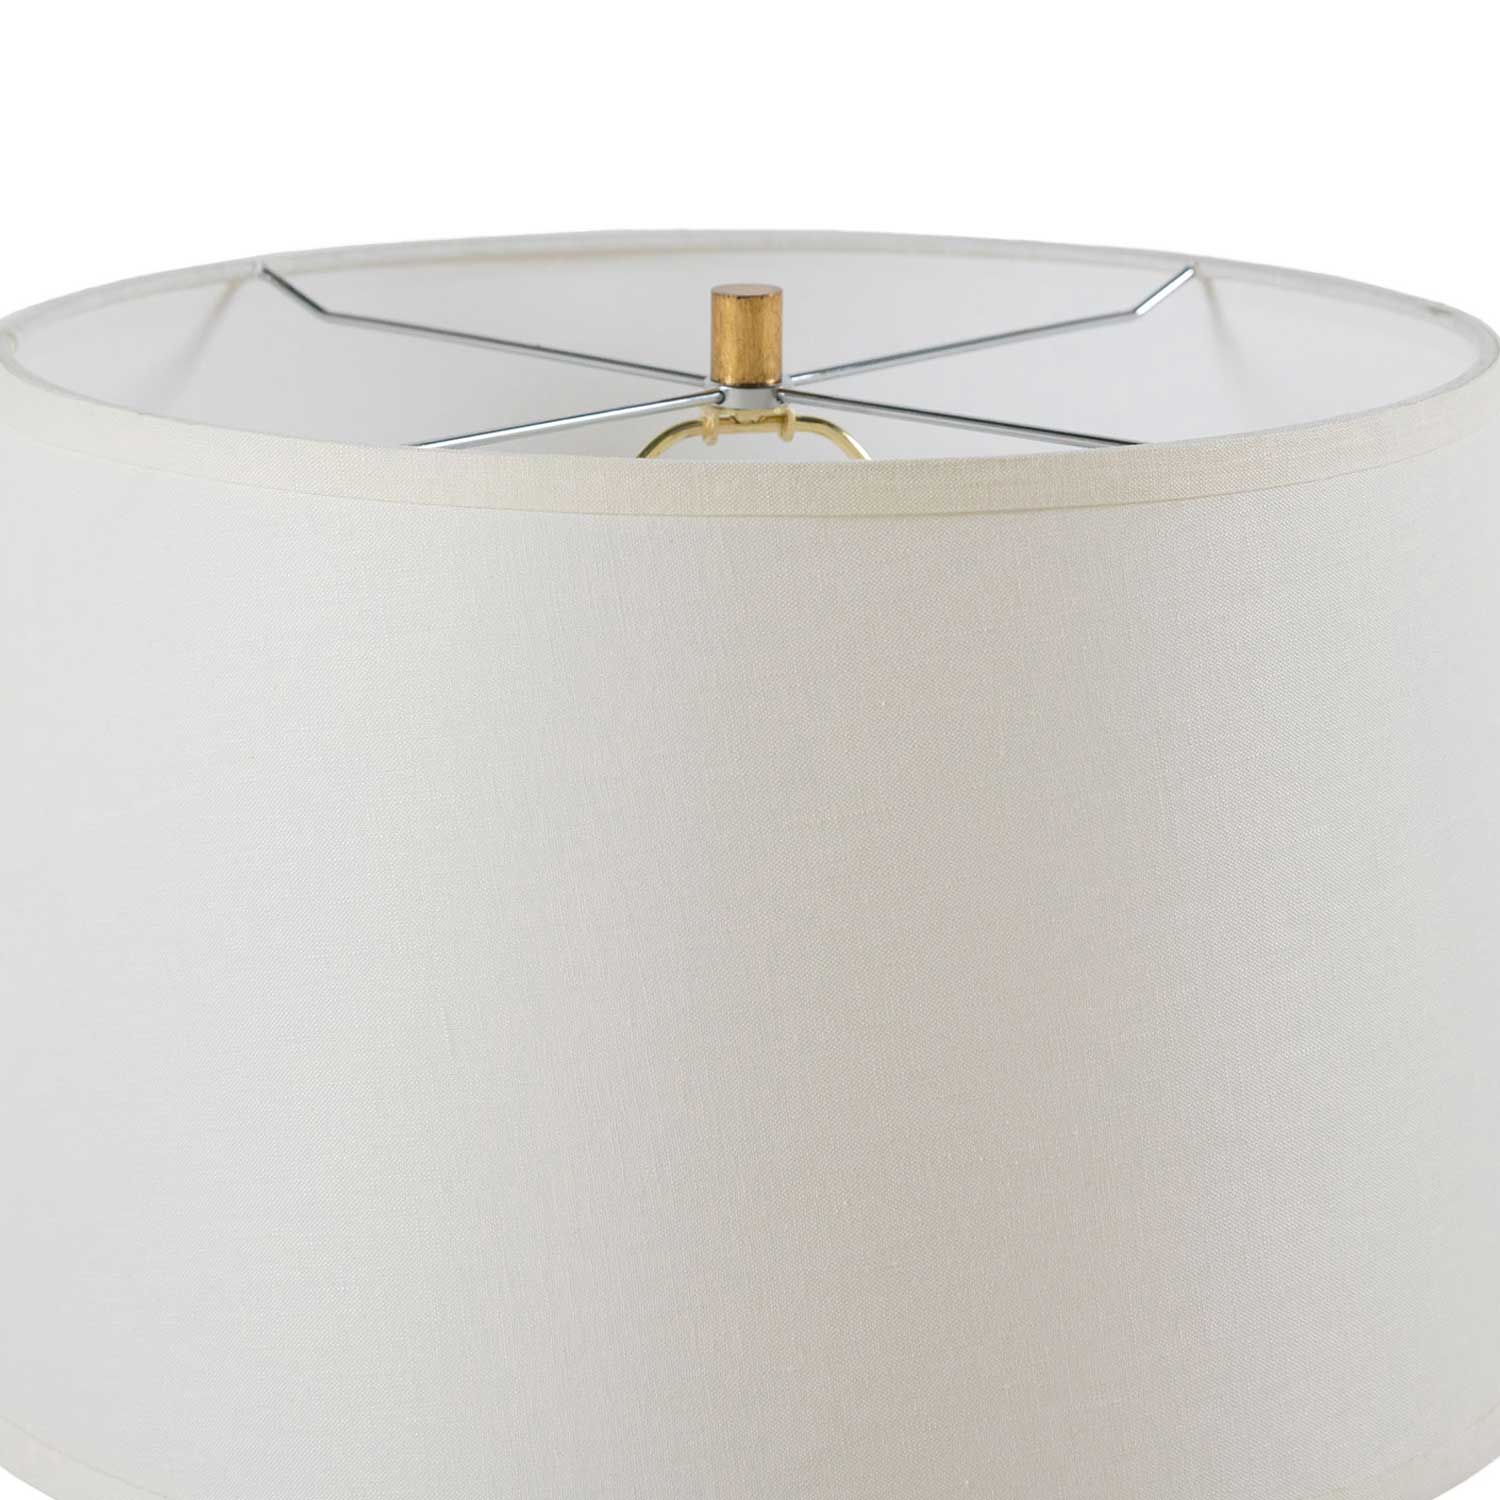 maple table lamp – sea salt thumbnail image